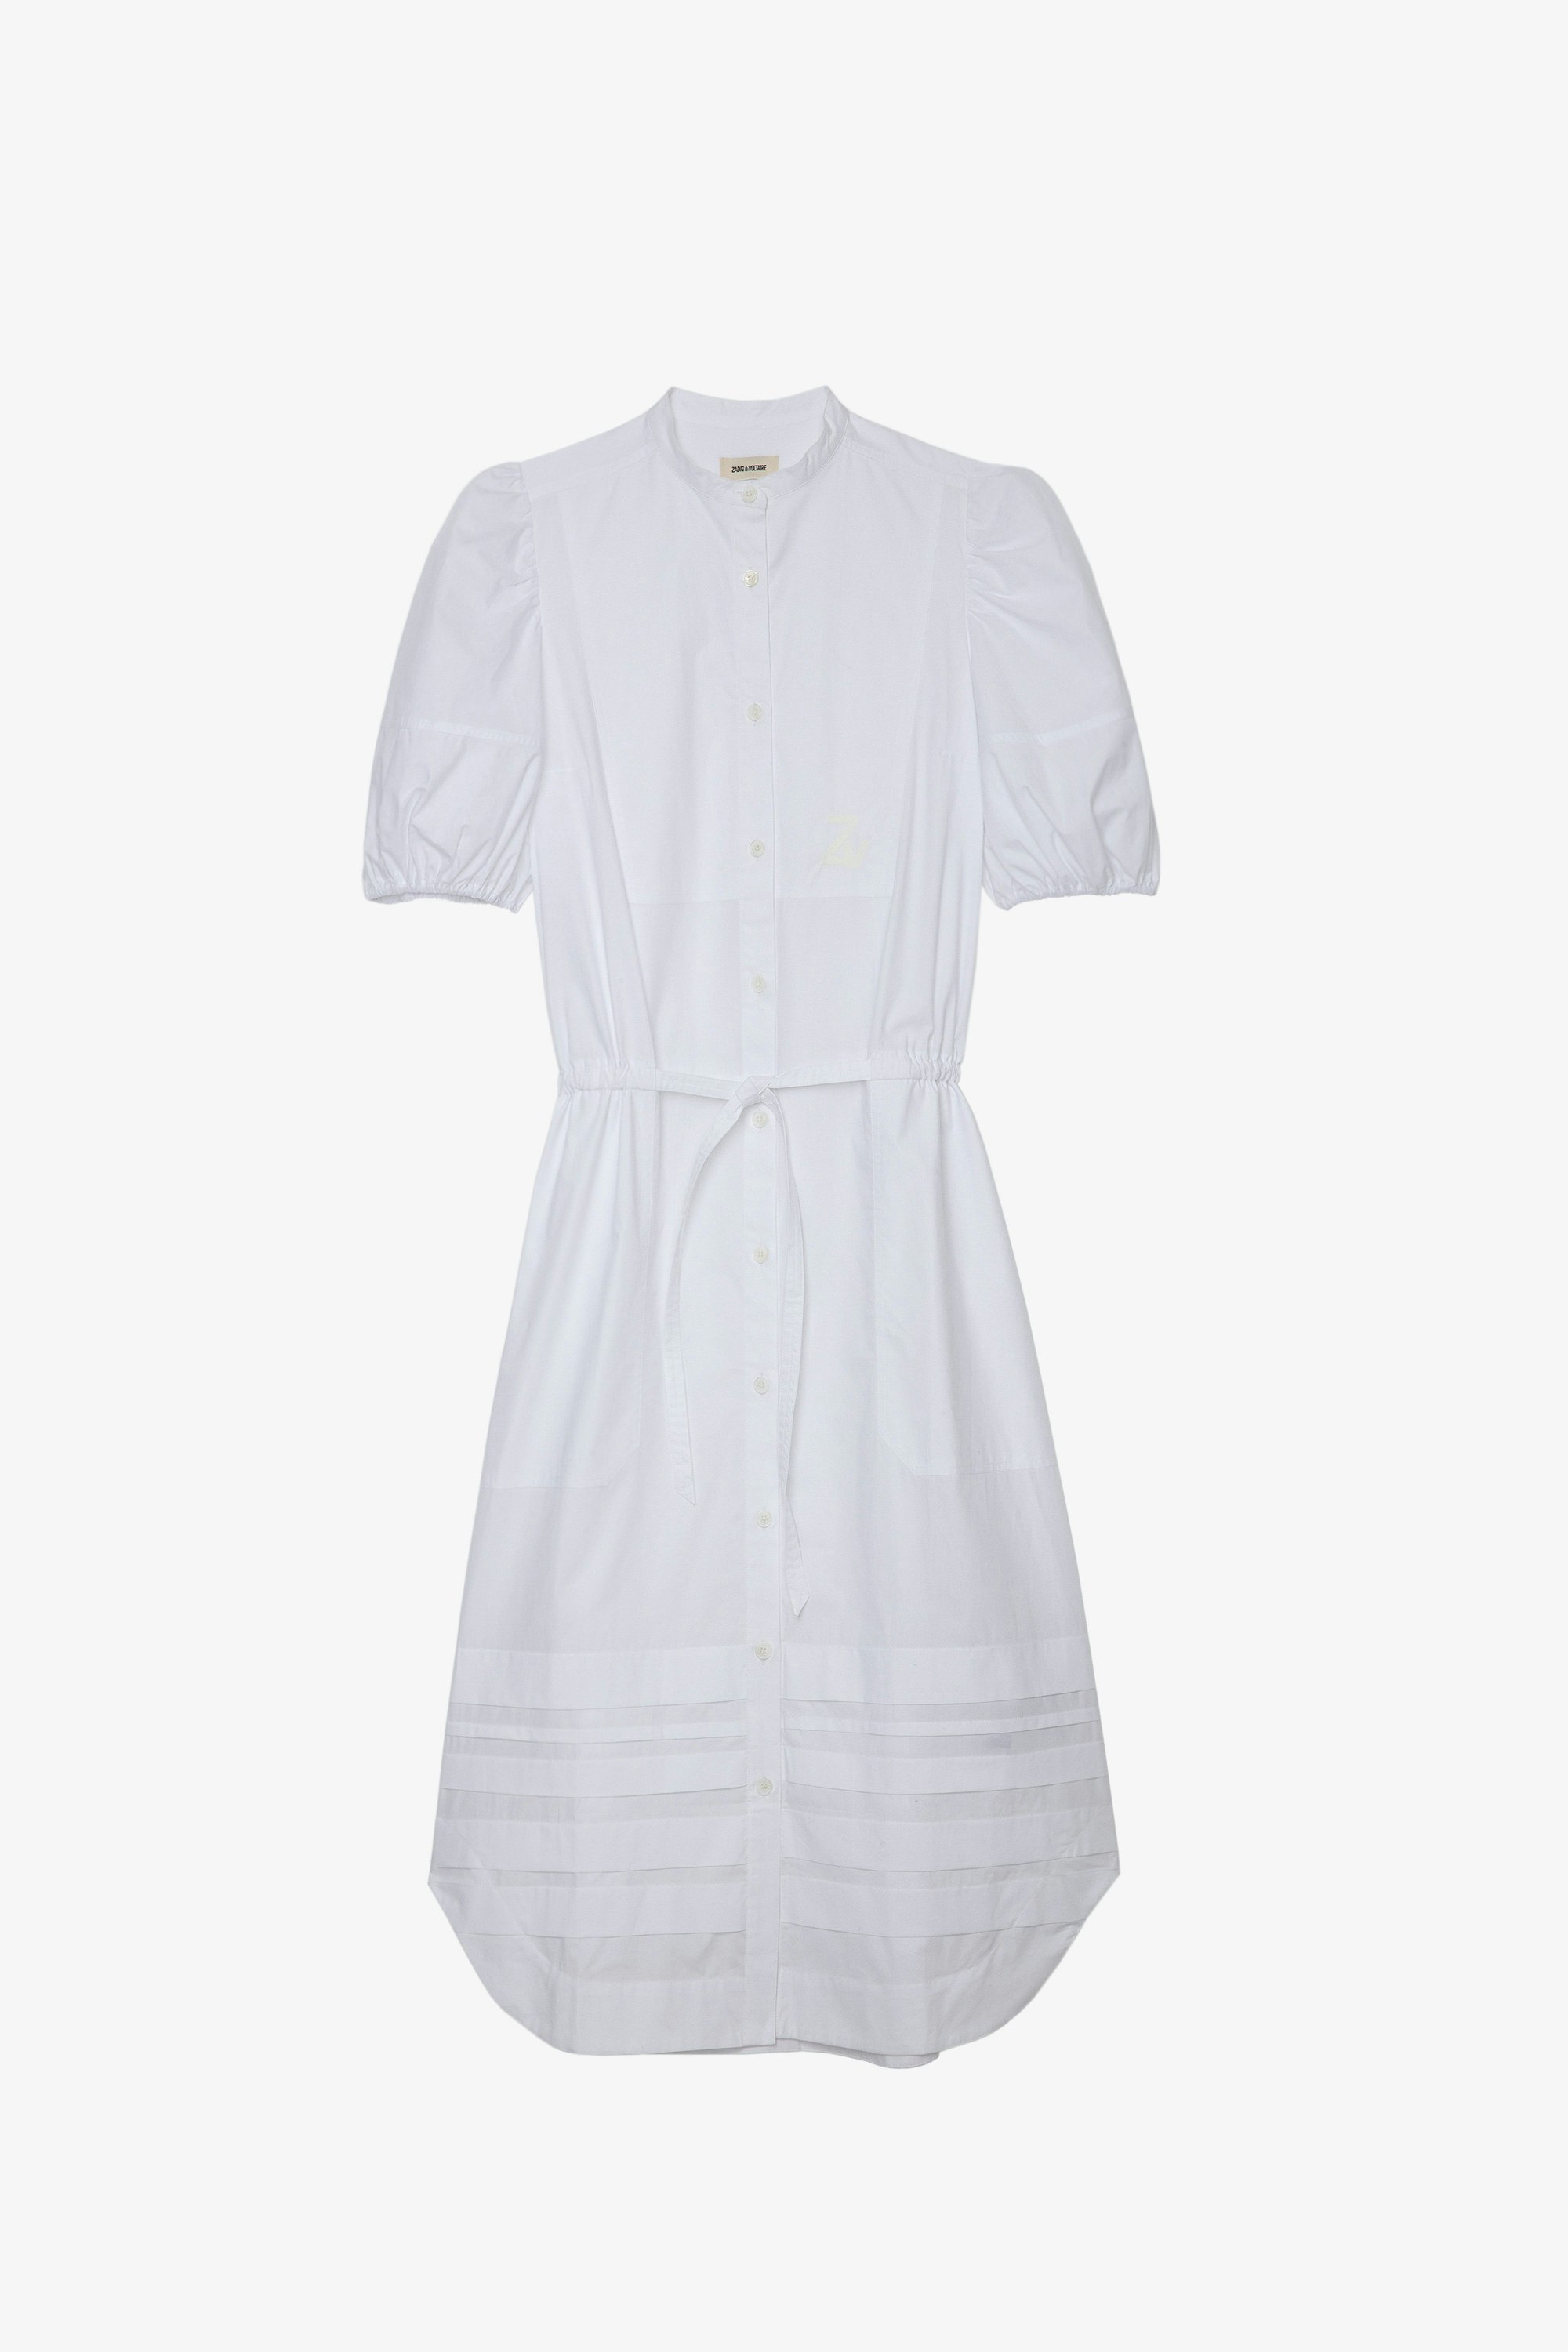 Ryana Pop ワンピース Women’s white cotton mid-length dress 